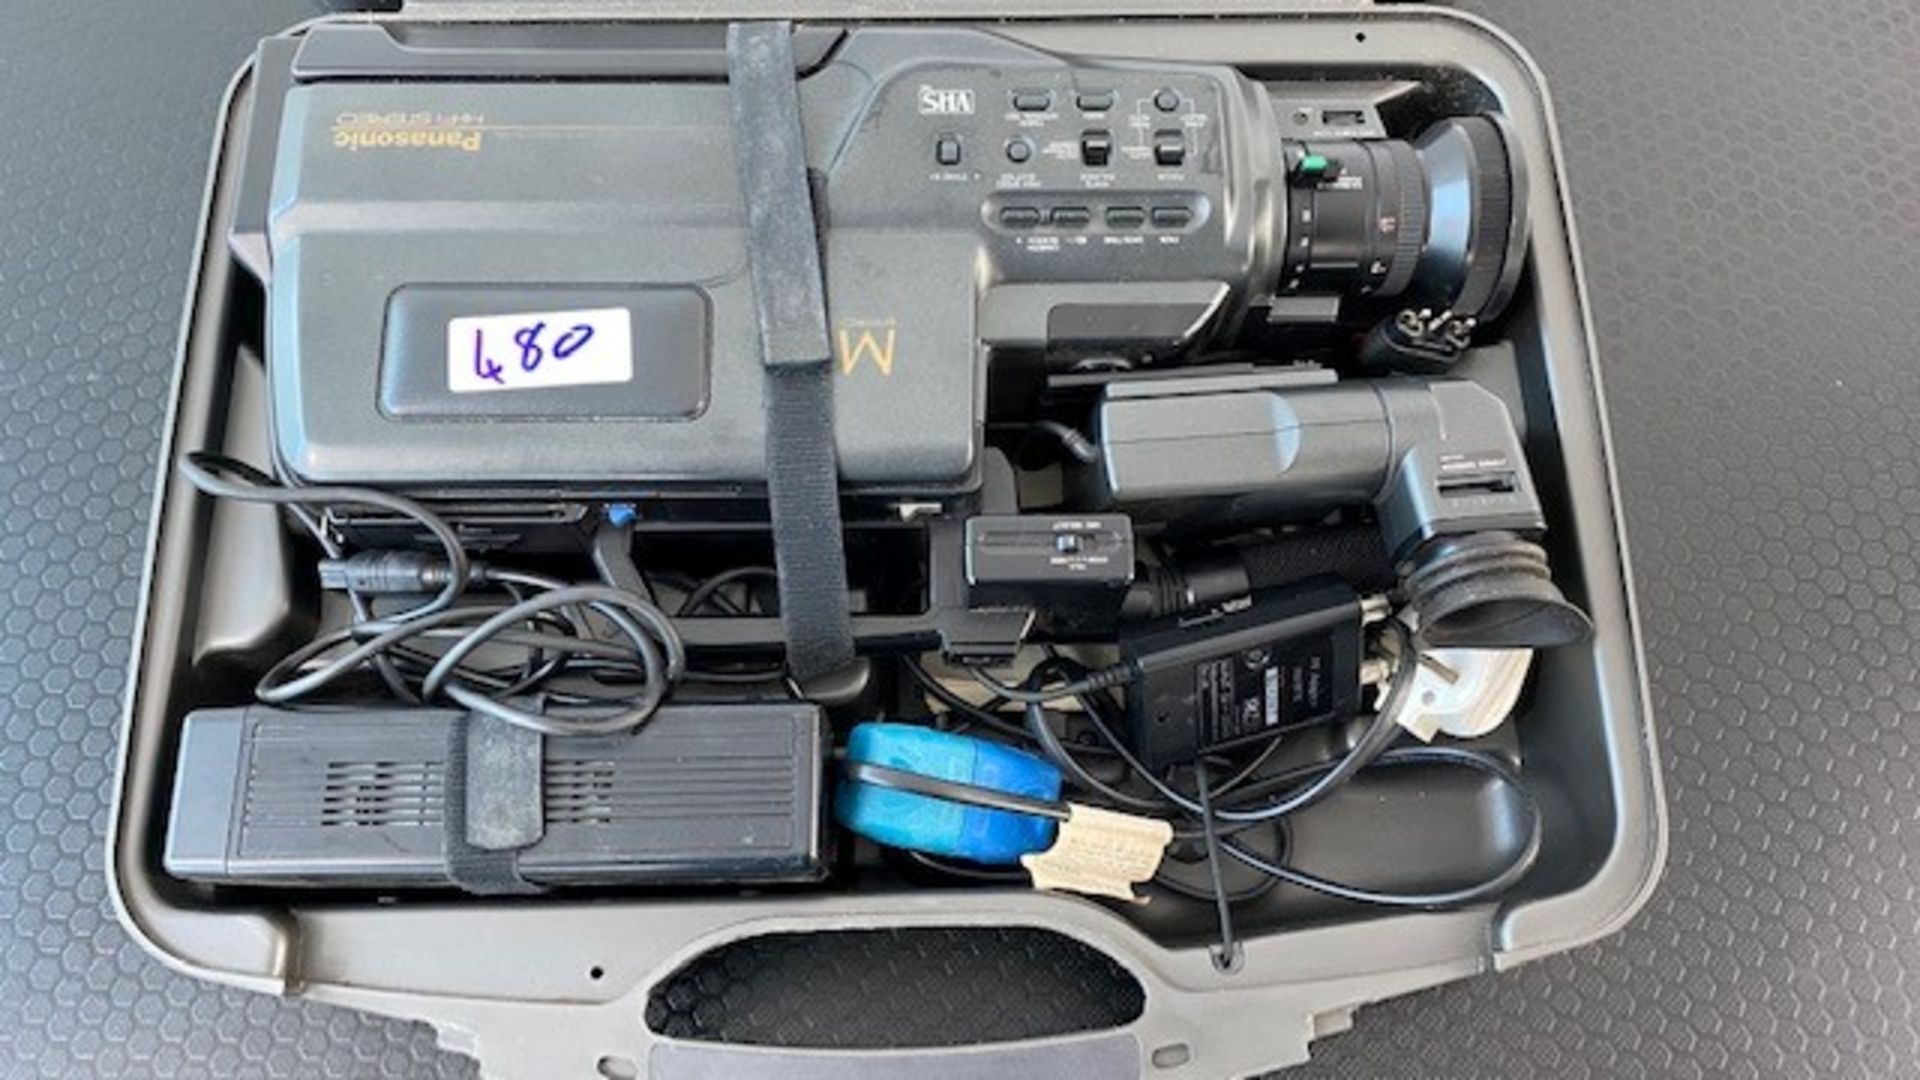 1 x Panasonic VHS Camcorder In Plastic Case - Ref: 480 - CL581 - Location: Altrincham WA14